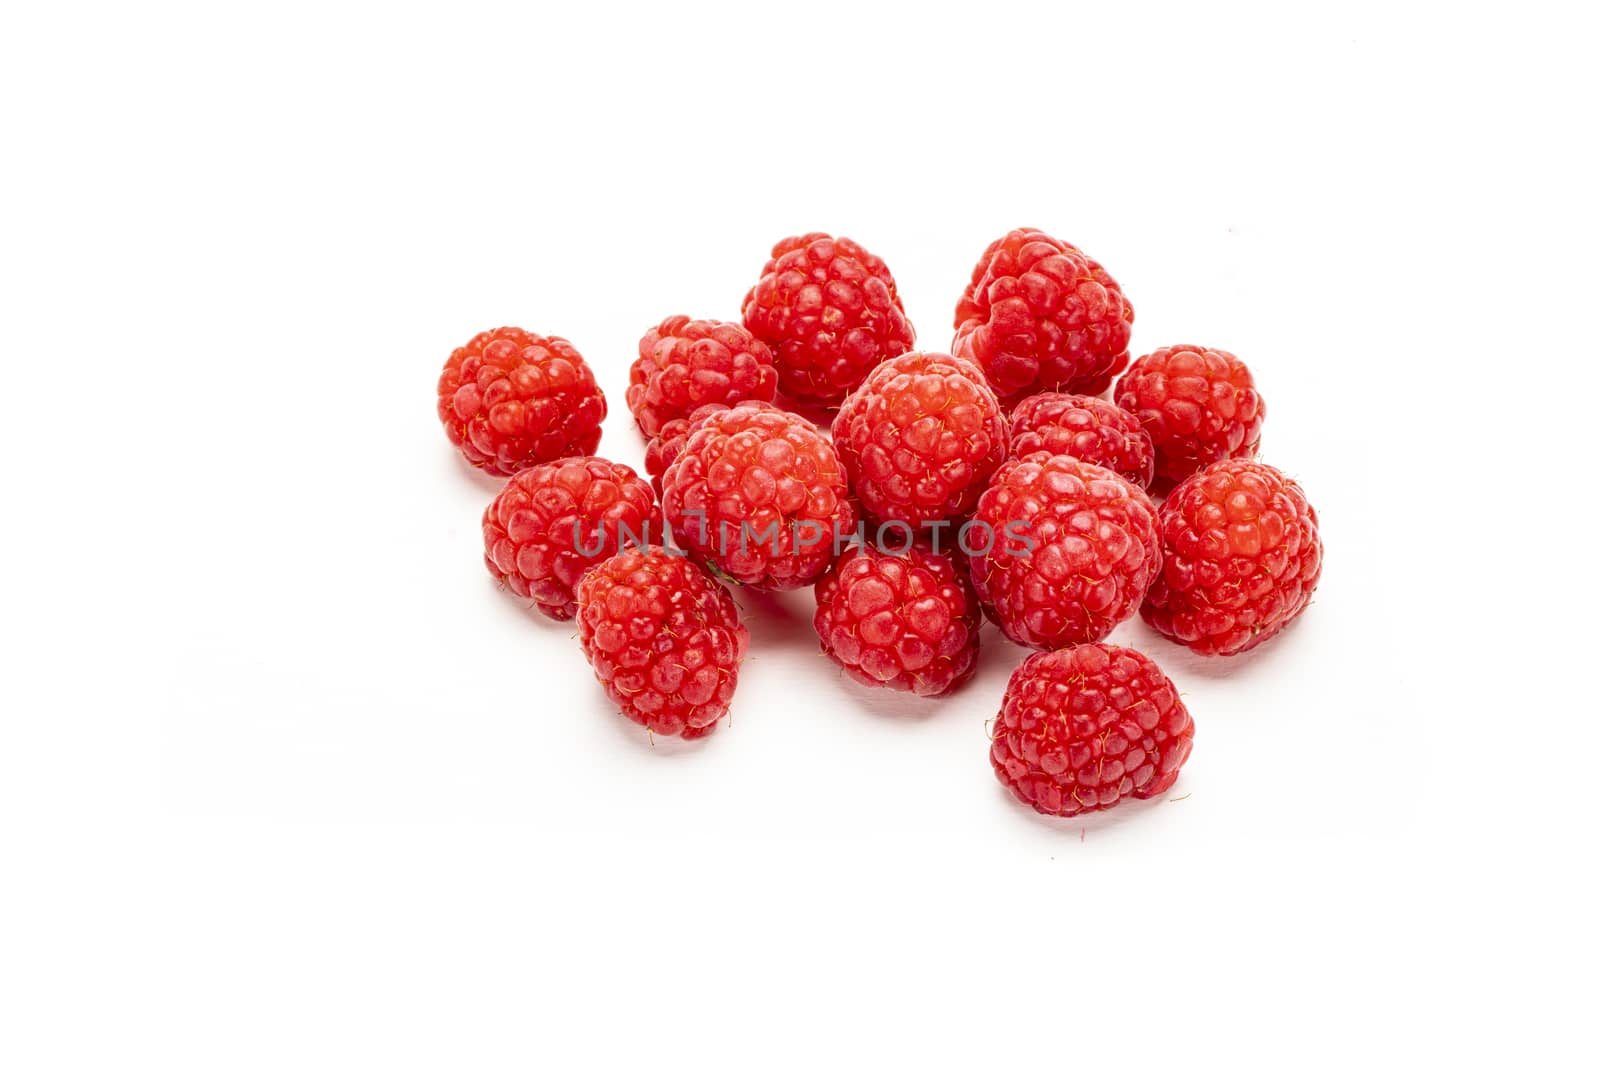 Fresh ripe raspberries isolated on white background.